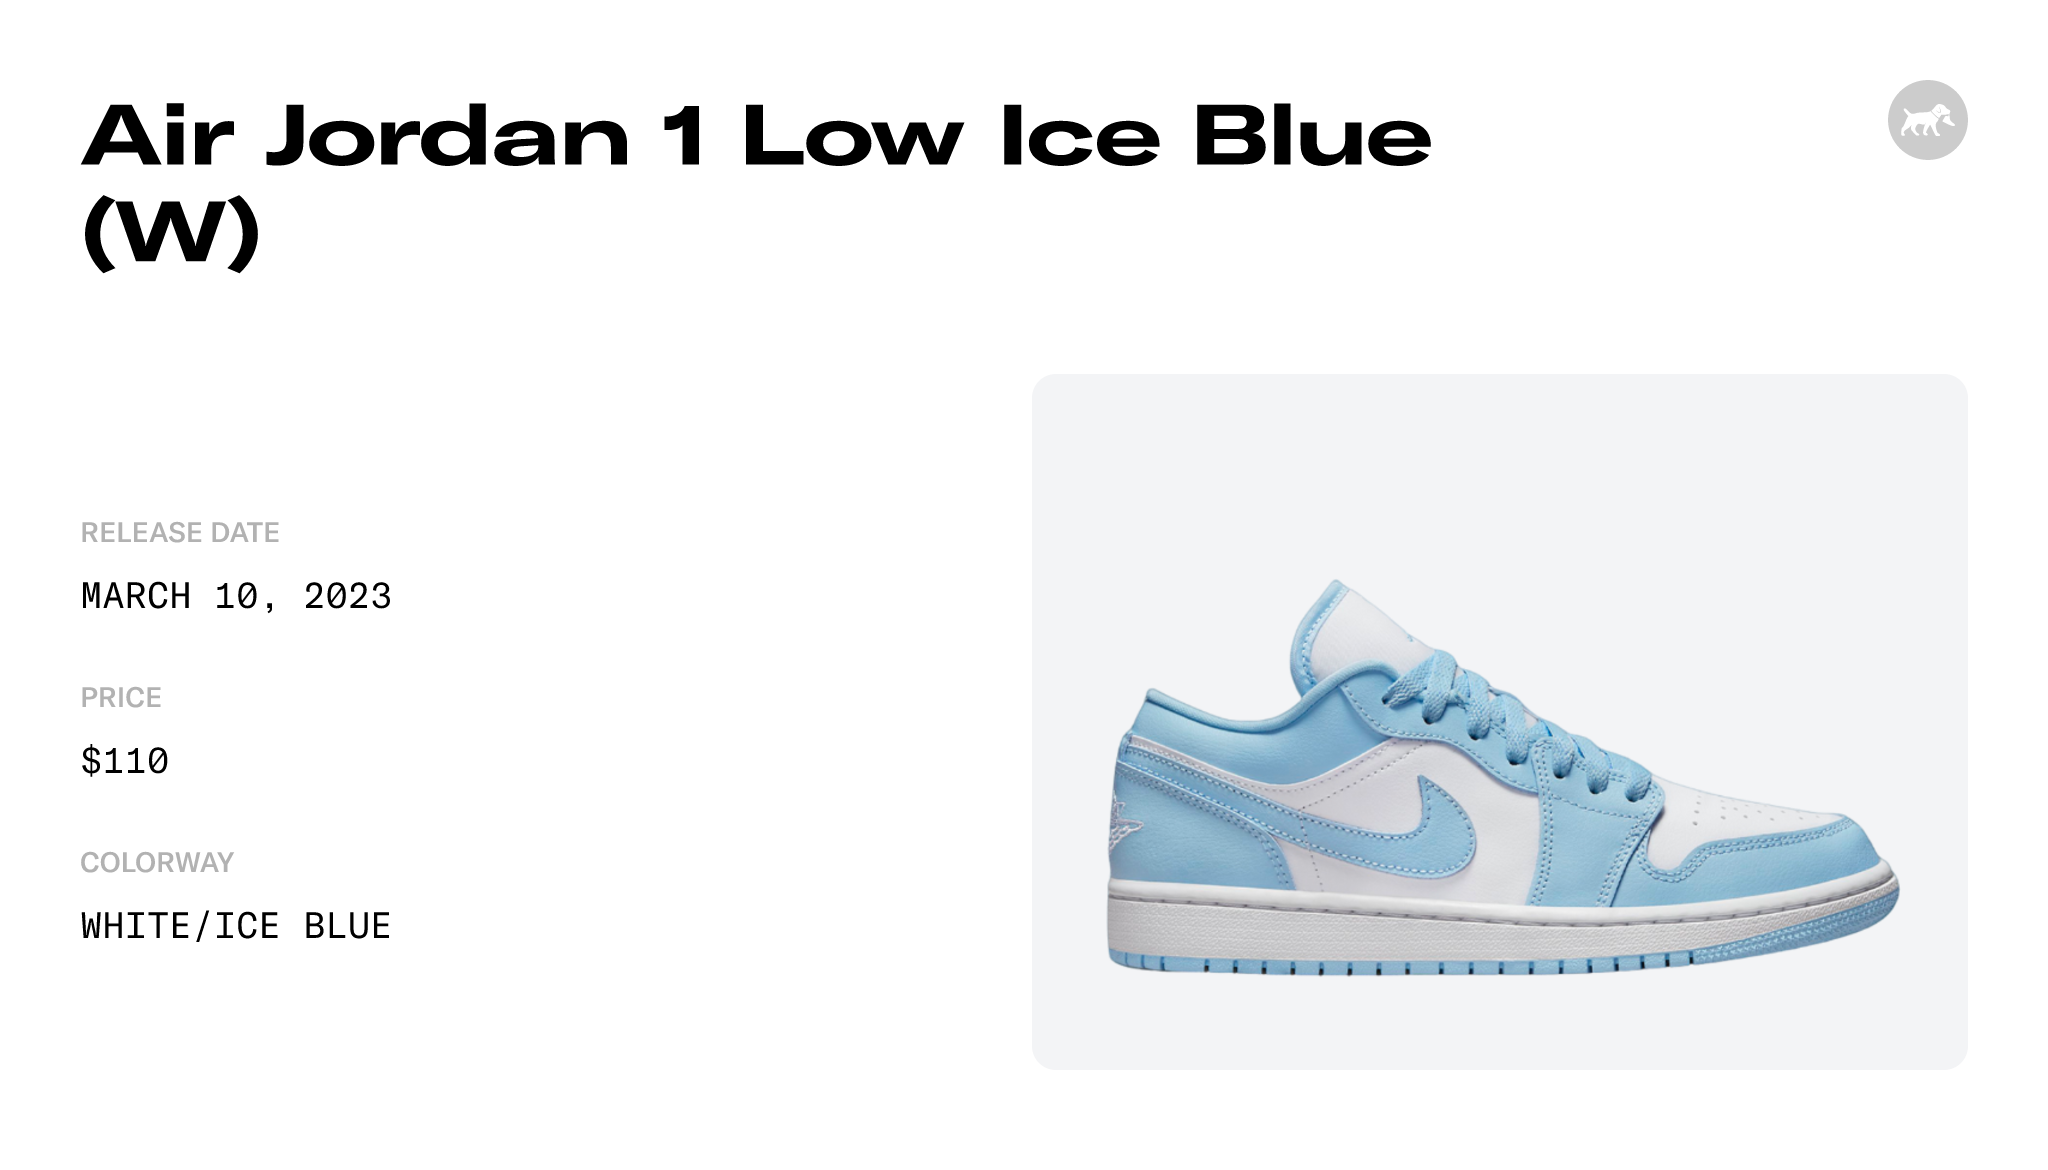 Air Jordan 1 Low Ice Blue (W) - DC0774-141 Raffles and Release Date